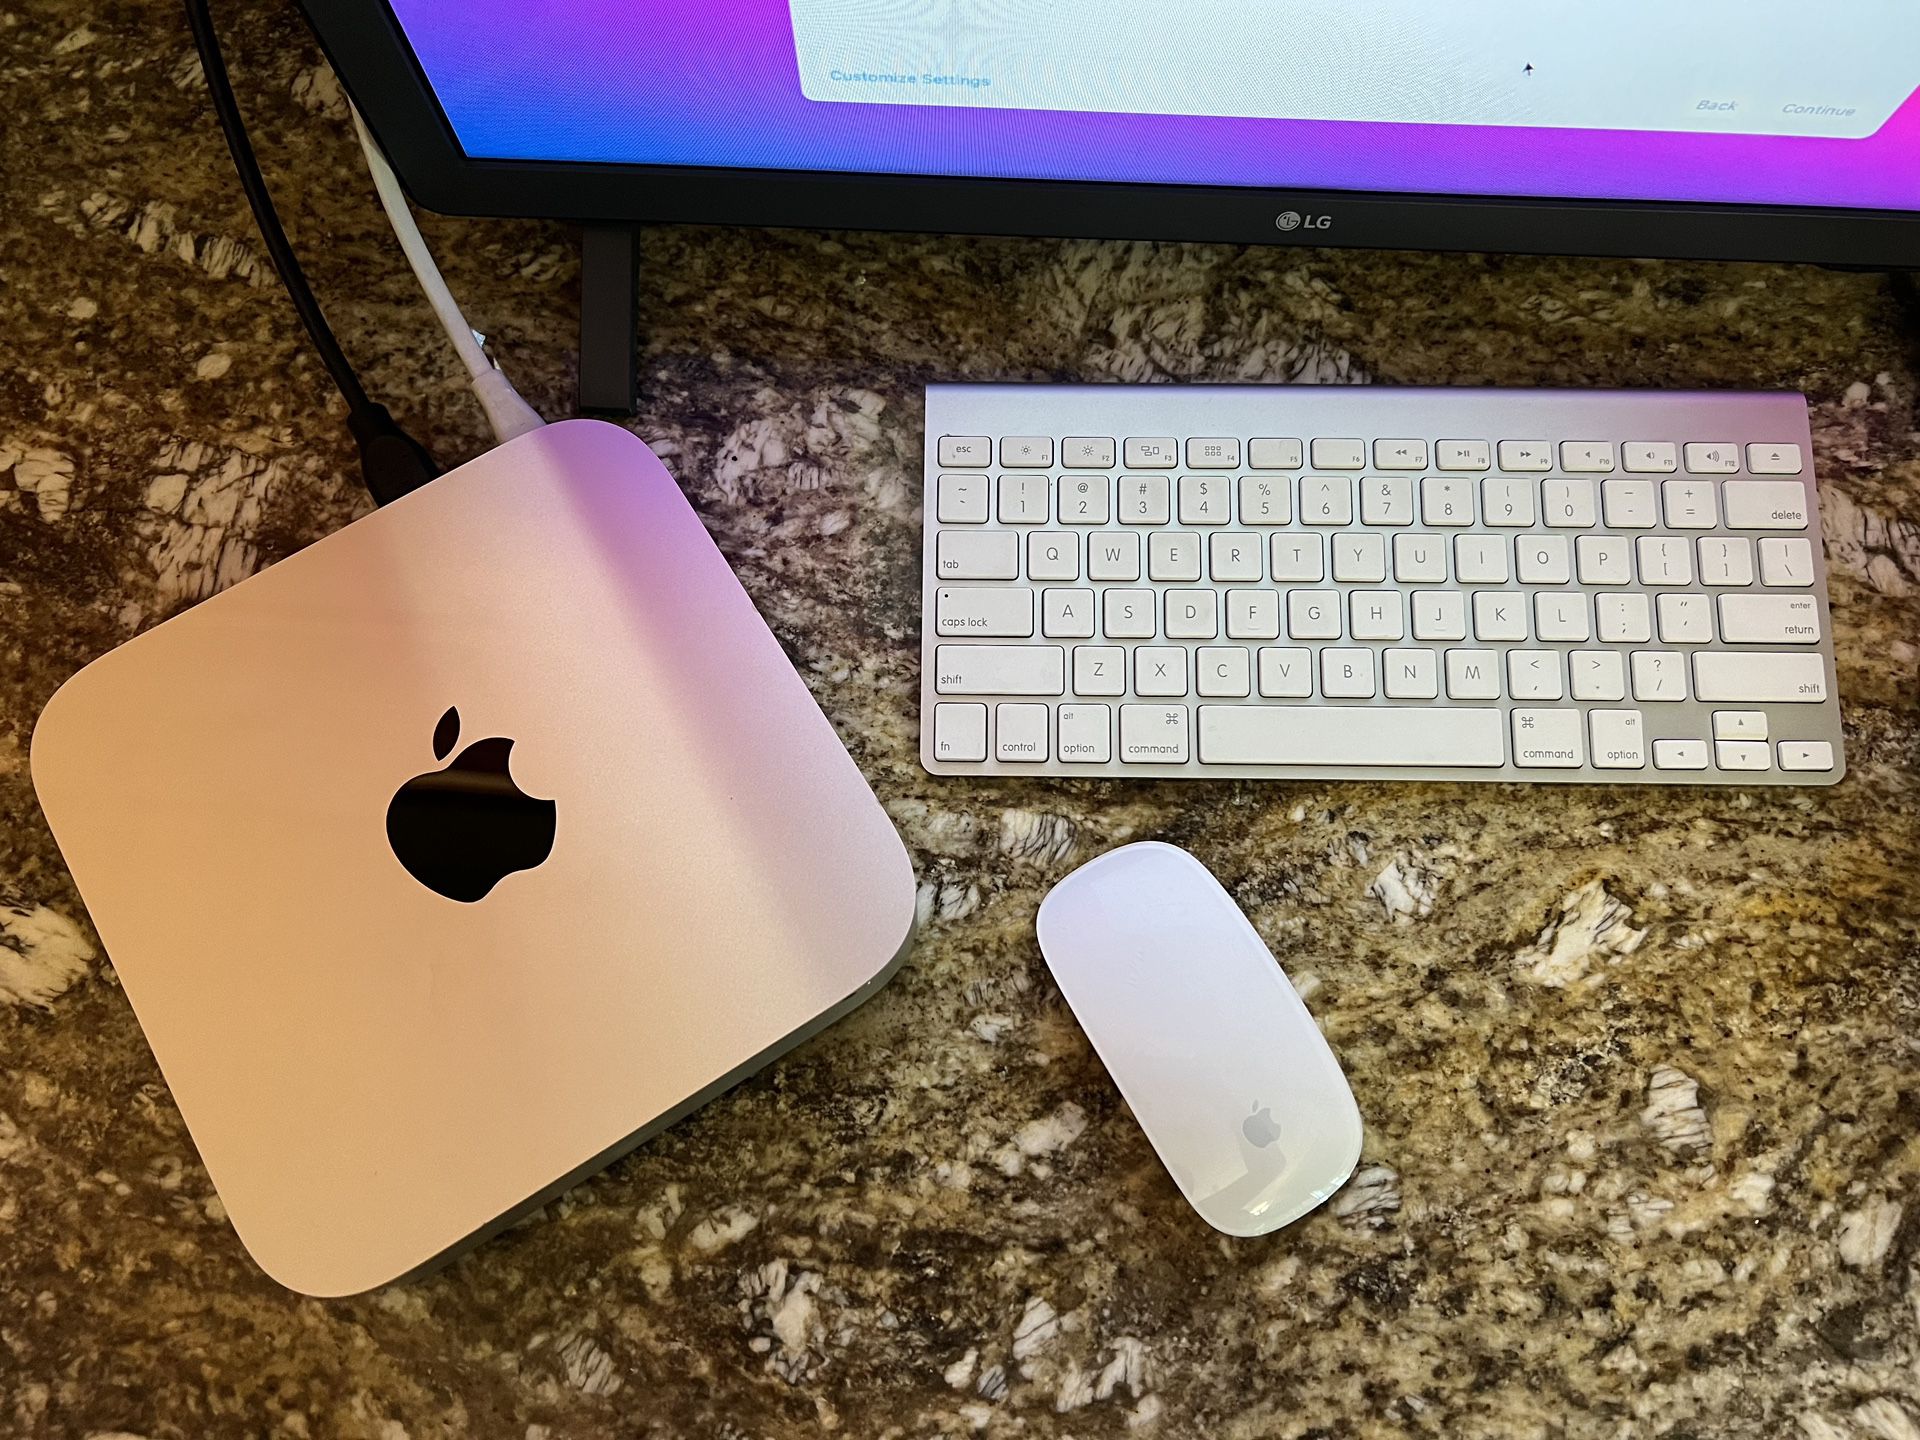 Apple Mac Mini (A1347) Magic Wireless keyboard and Magic Wirless Mouse